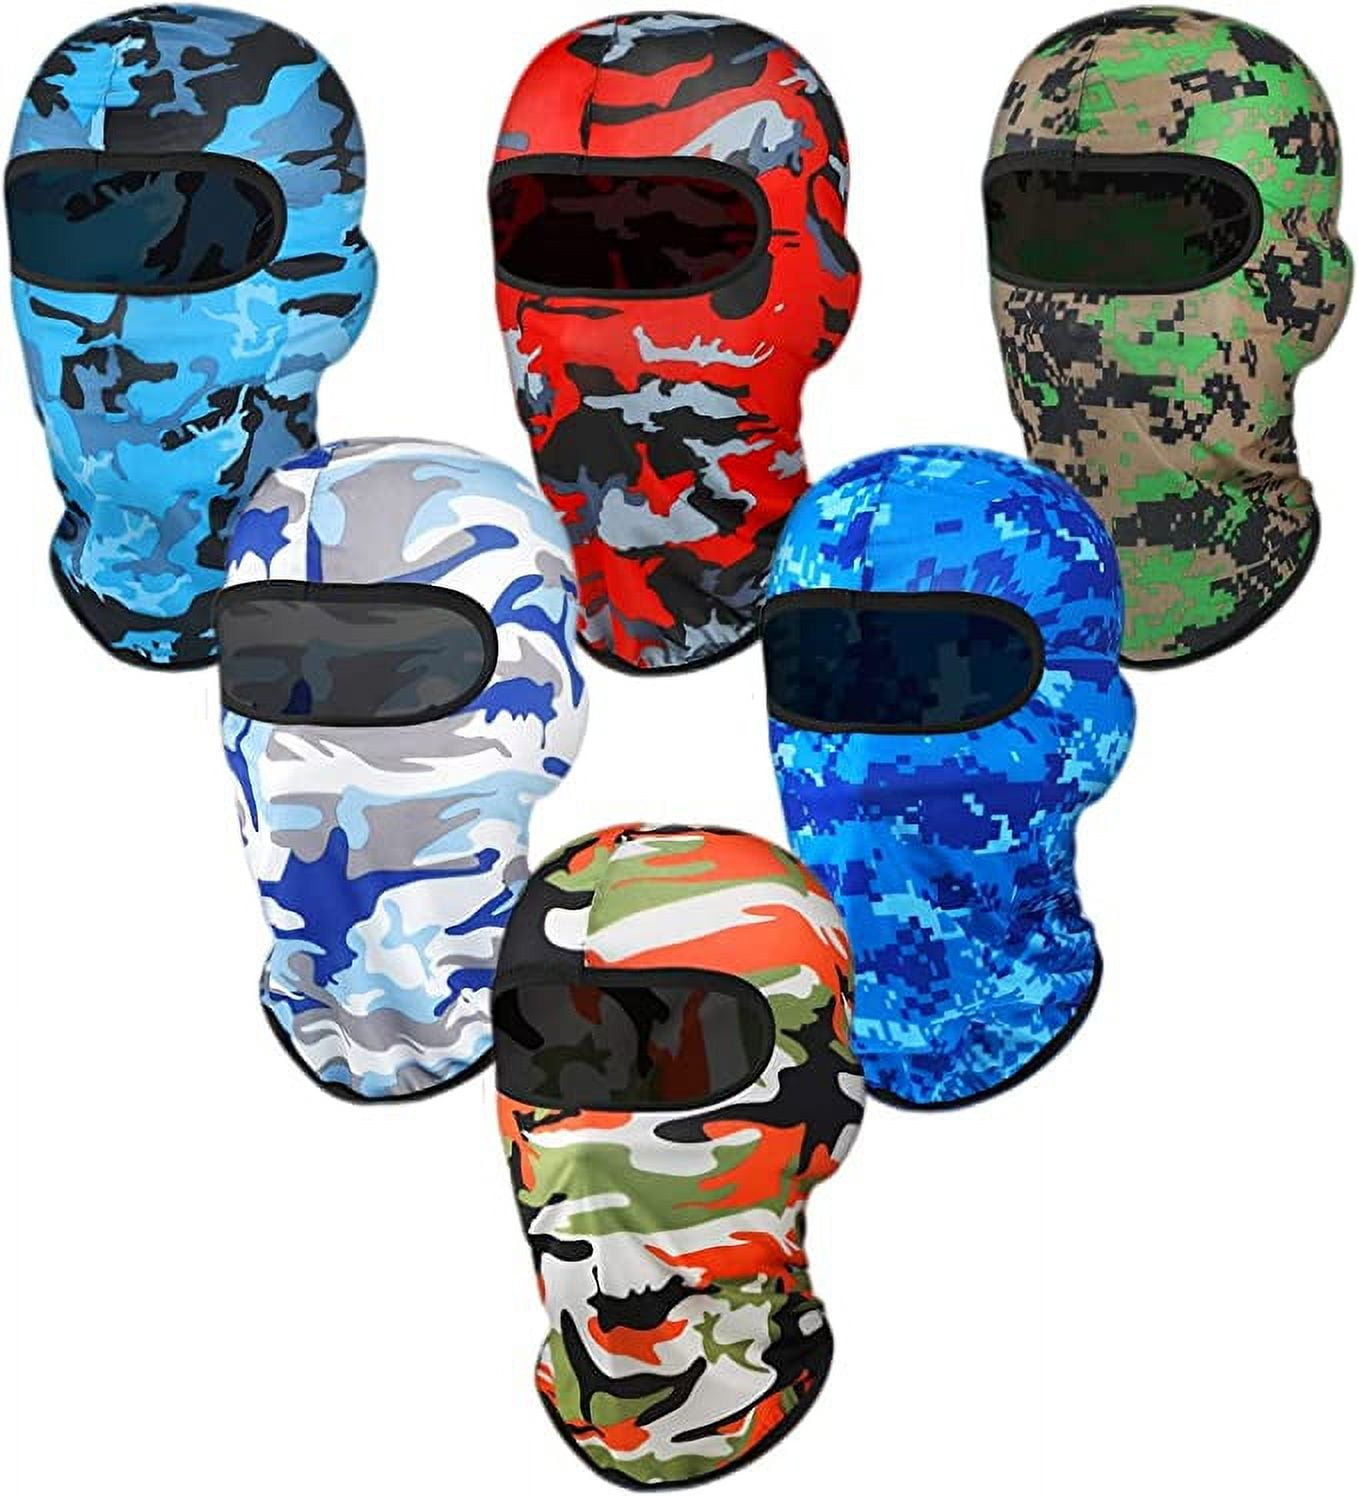 SHOC Shiesty Mask  Balaclava Ski Mask